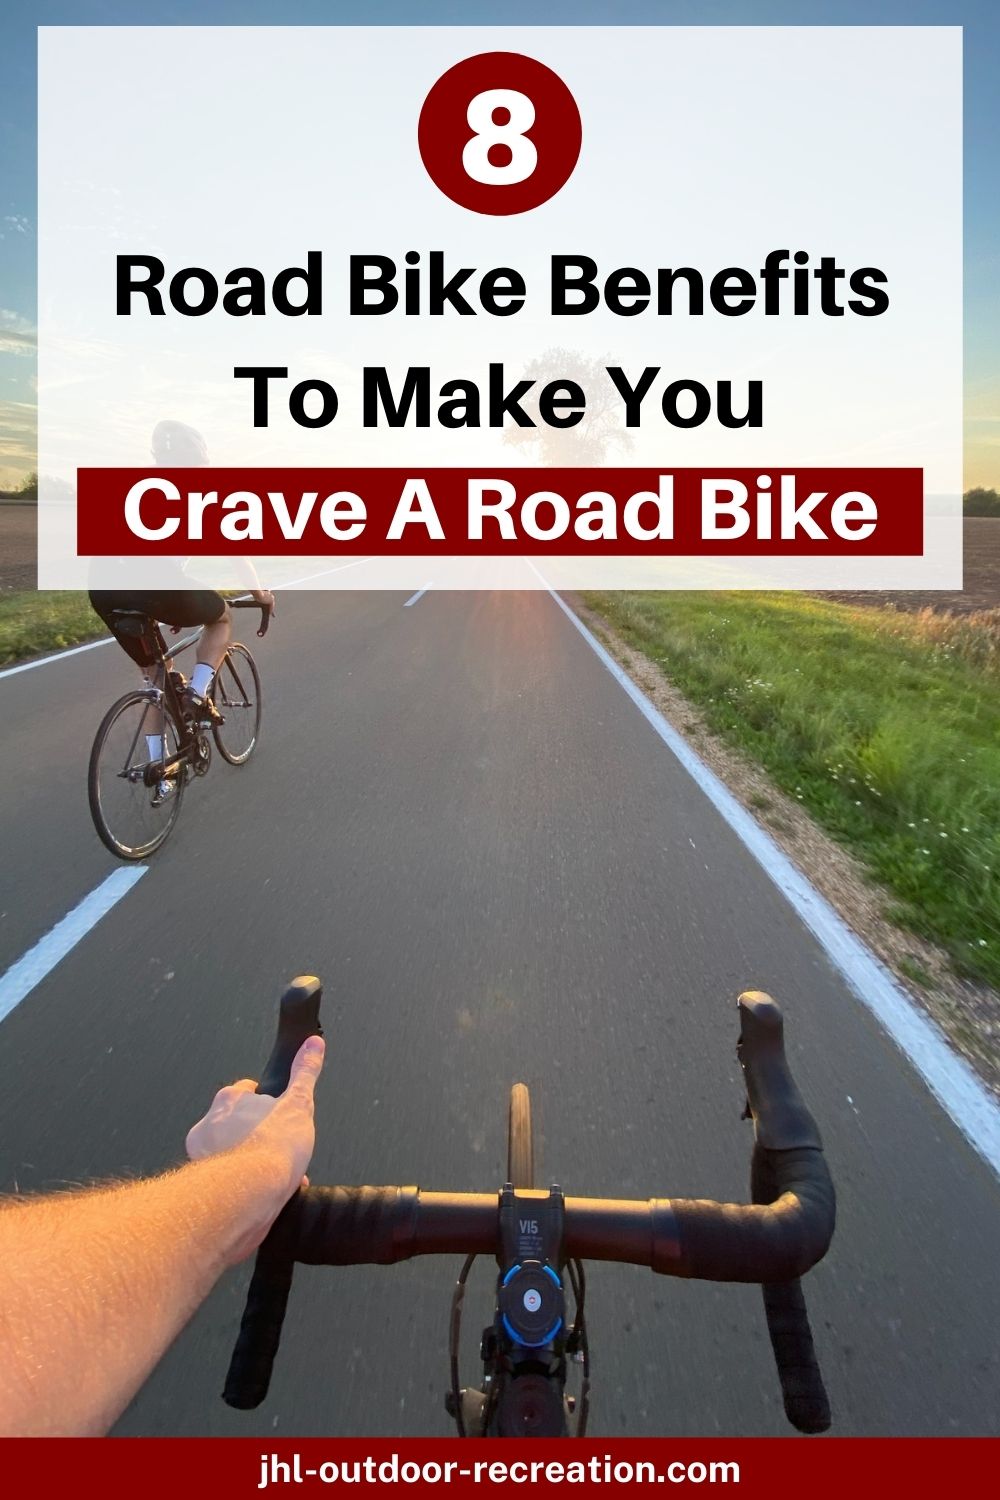 Road bike benefits